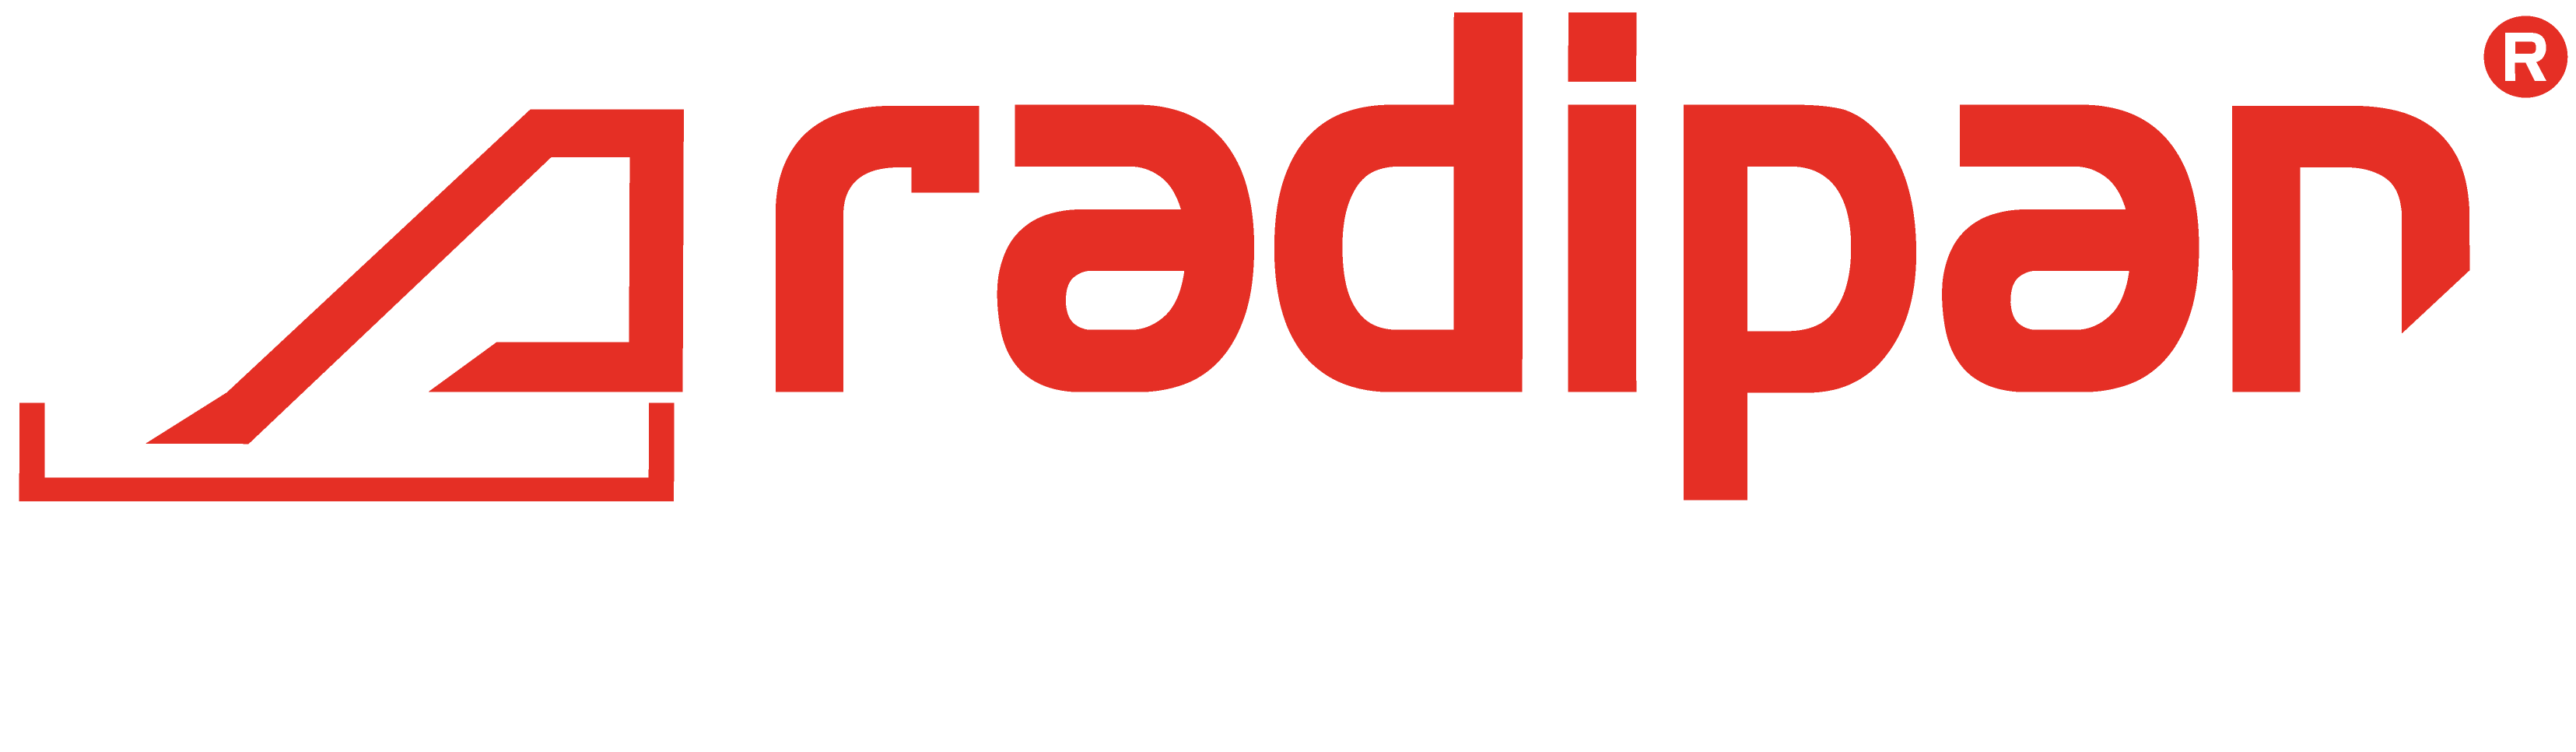 Radipan Alüminyum Radyatör ve Havlupan